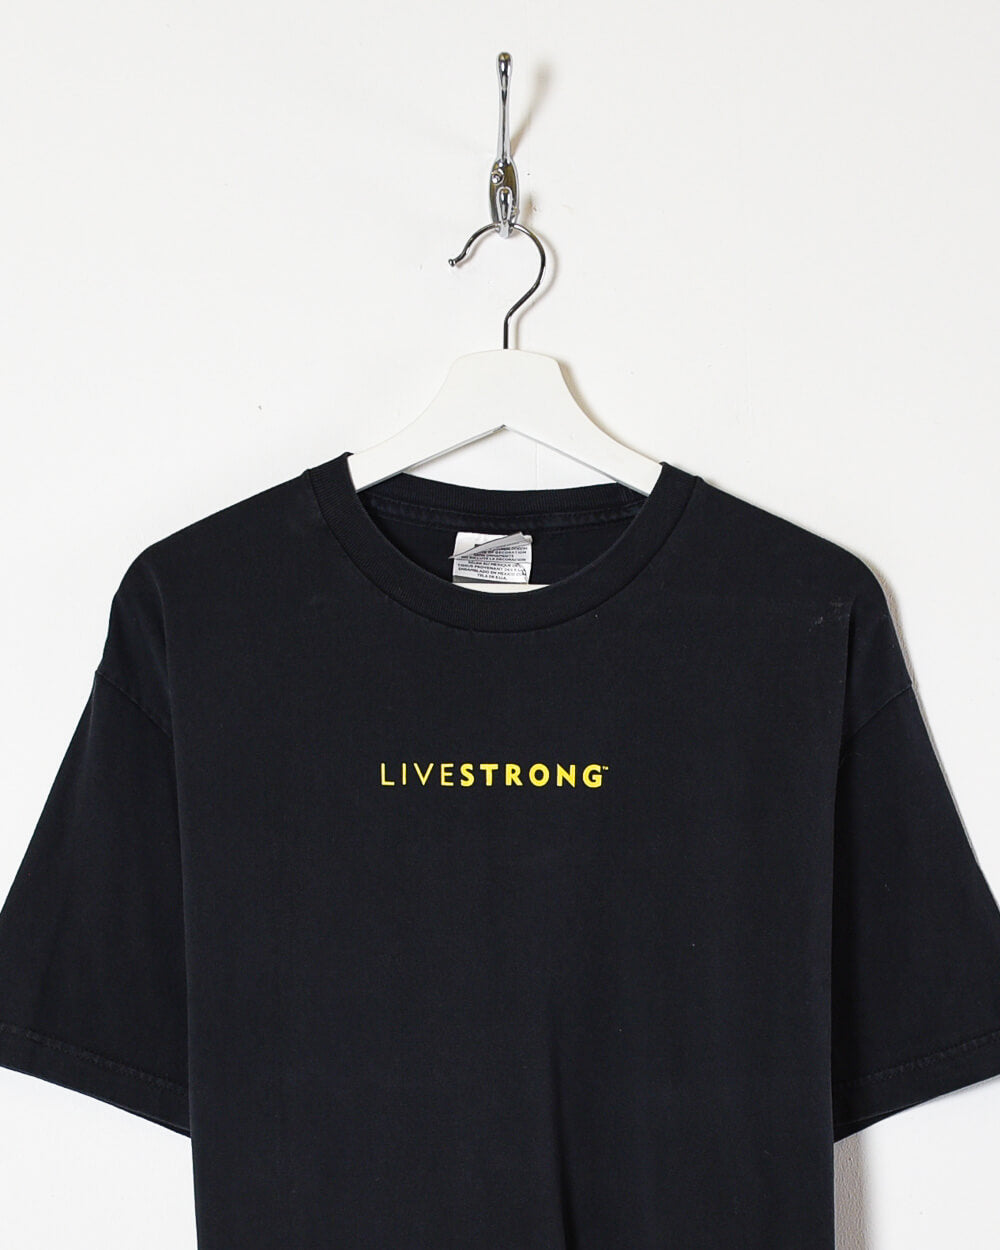 Black Nike Lance Armstrong LiveStrong T-Shirt - Large